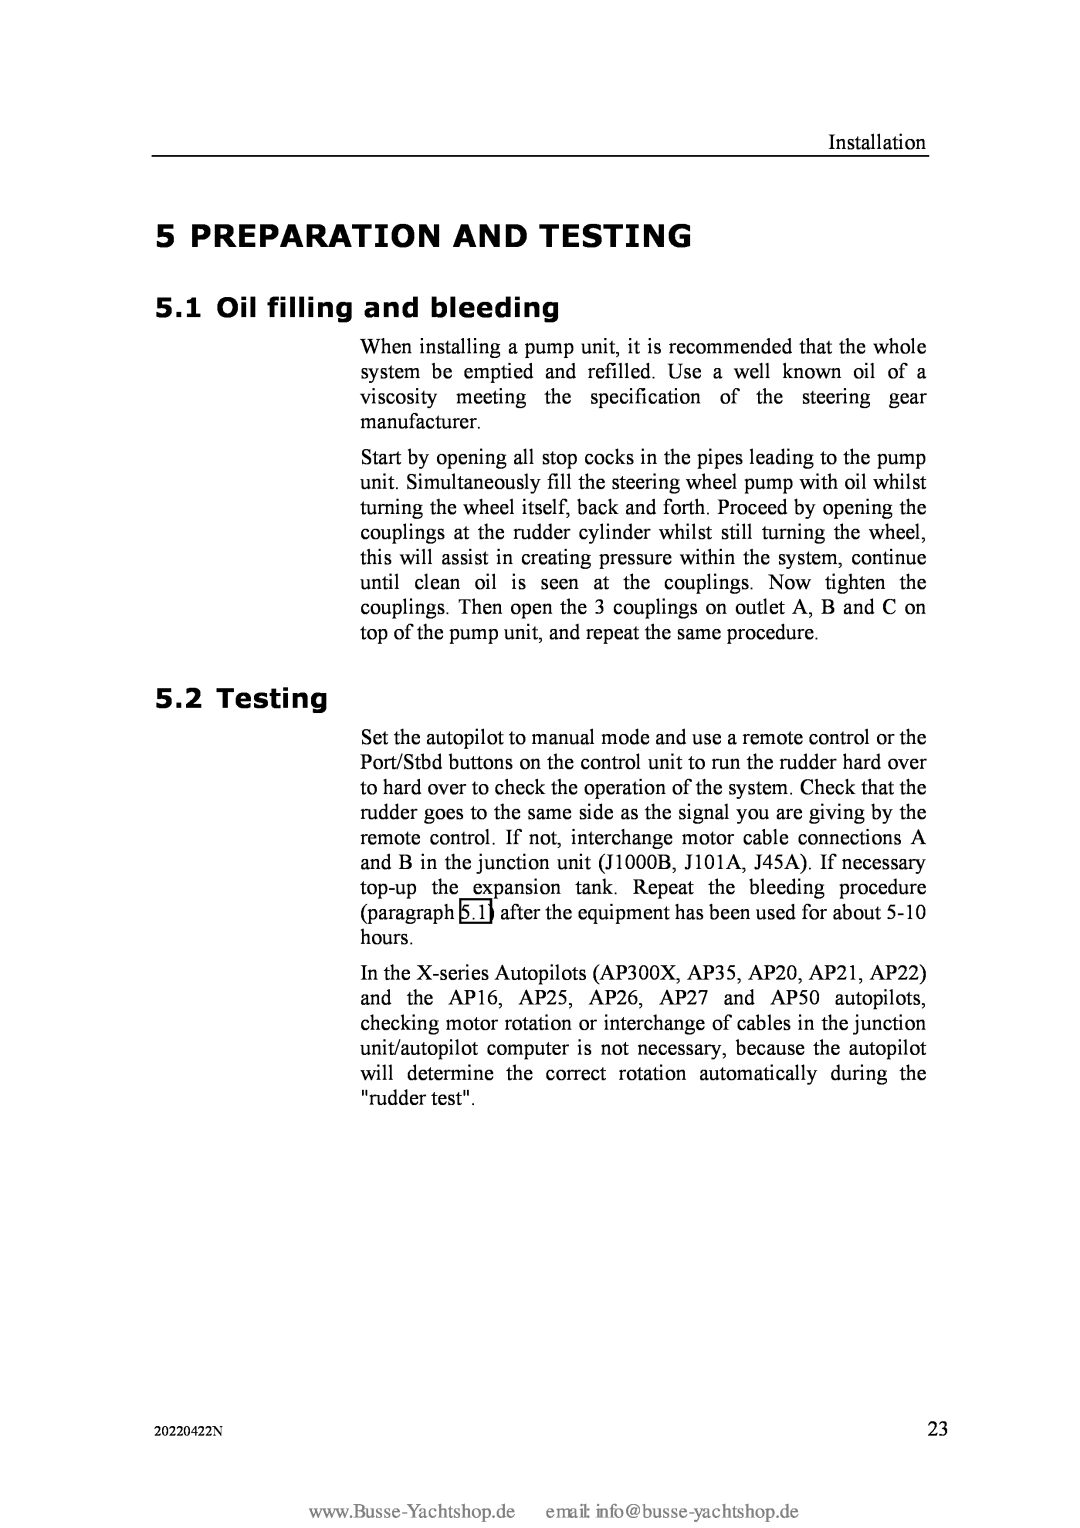 Simran RPU80 instruction manual Preparation And Testing, Oil filling and bleeding 